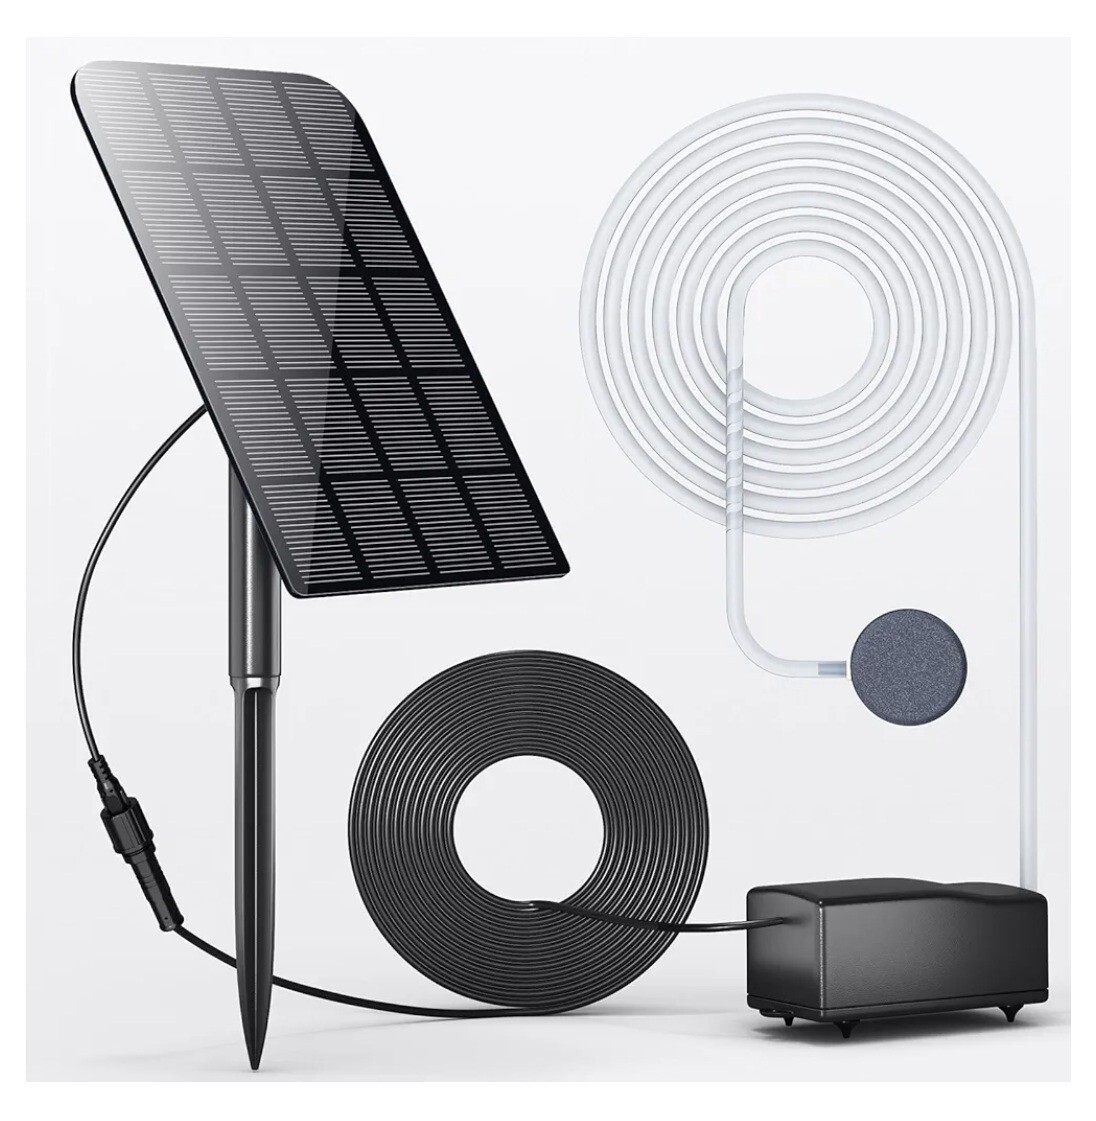 Biling エアーポンプ ソーラー エアポンプ 水槽ポンプ 太陽光給電式 各種水槽の酸素供給 エアチューブ エアストーン 2.5W発電パネルの画像1